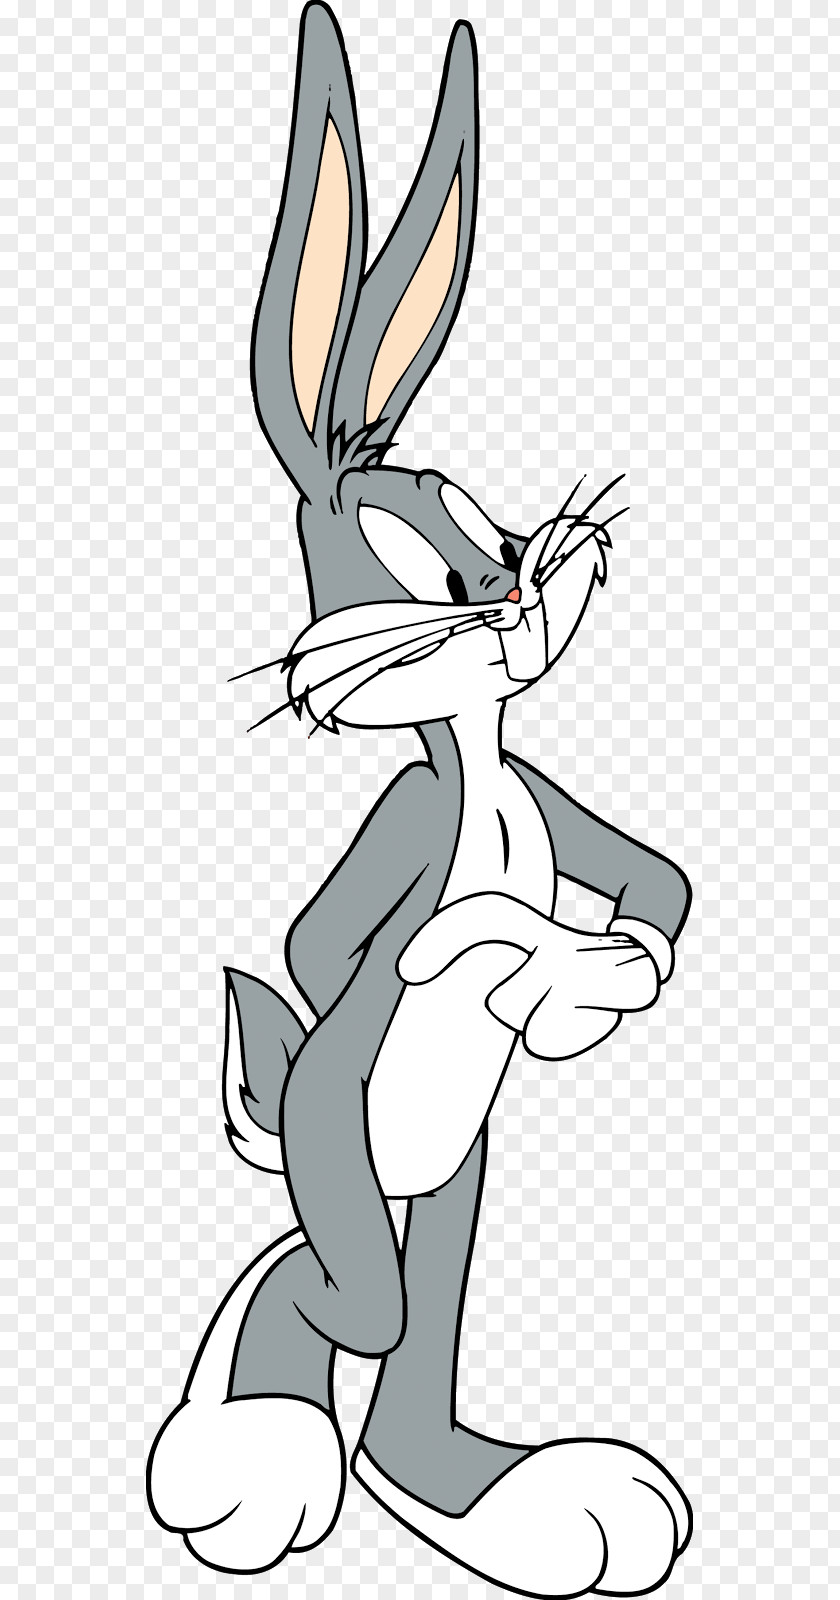 Bugs Bunny Cartoon Looney Tunes Clip Art PNG